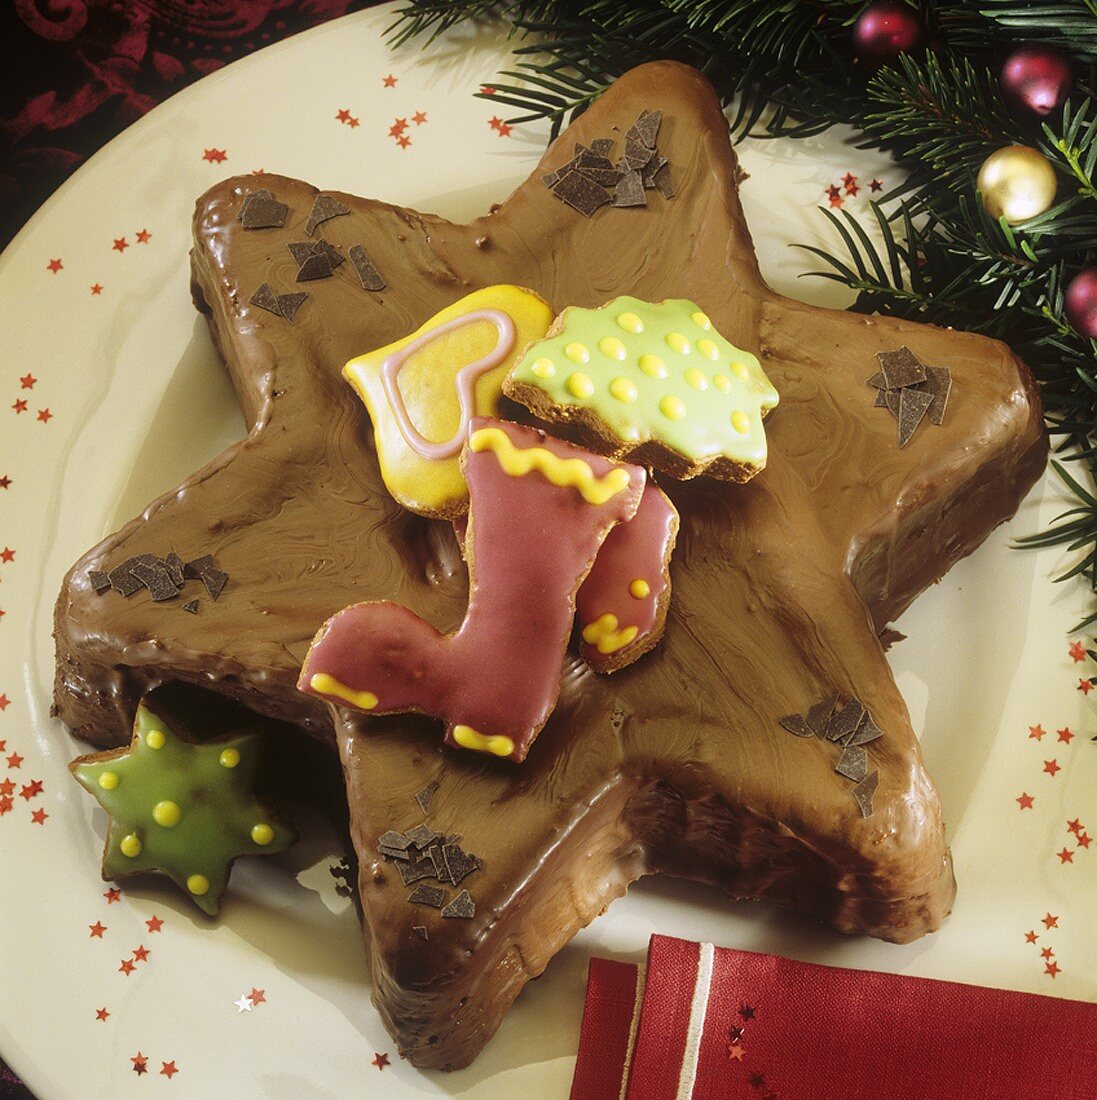 Star-shaped chocolate cake for Christmas